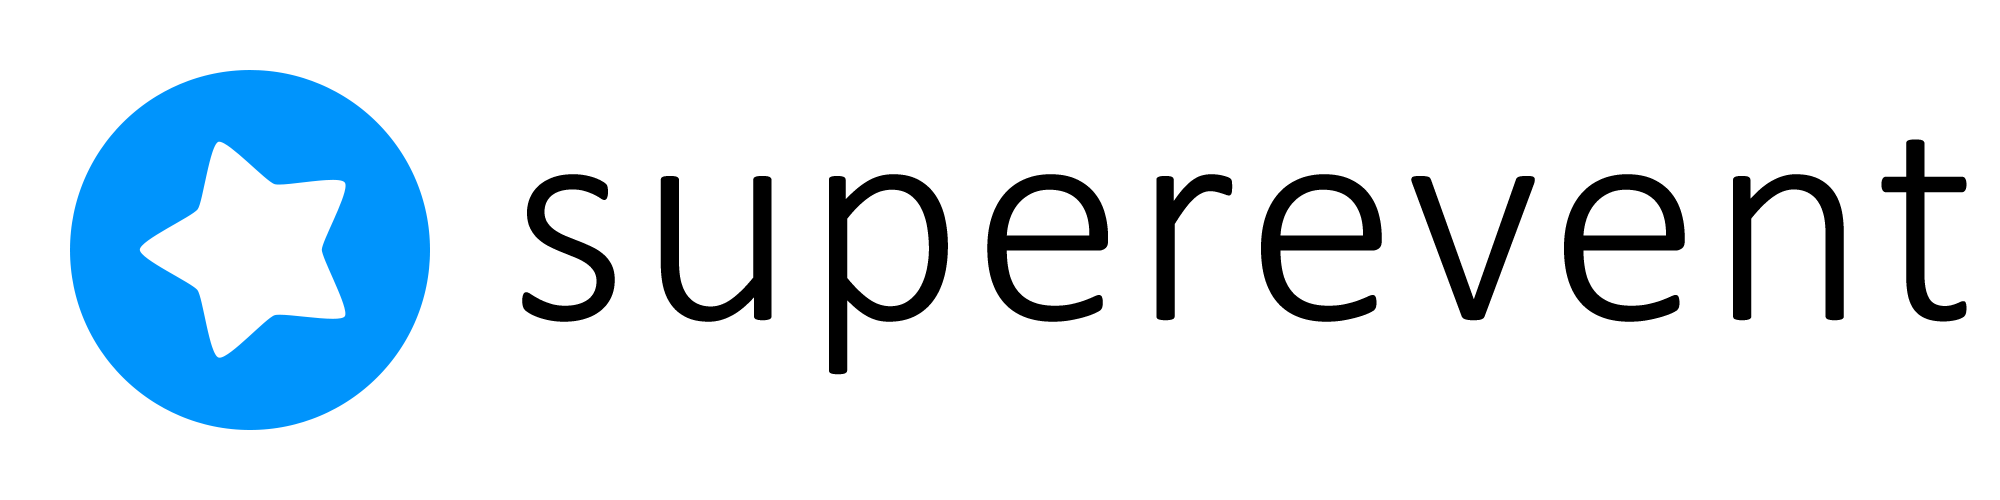 superevent logo